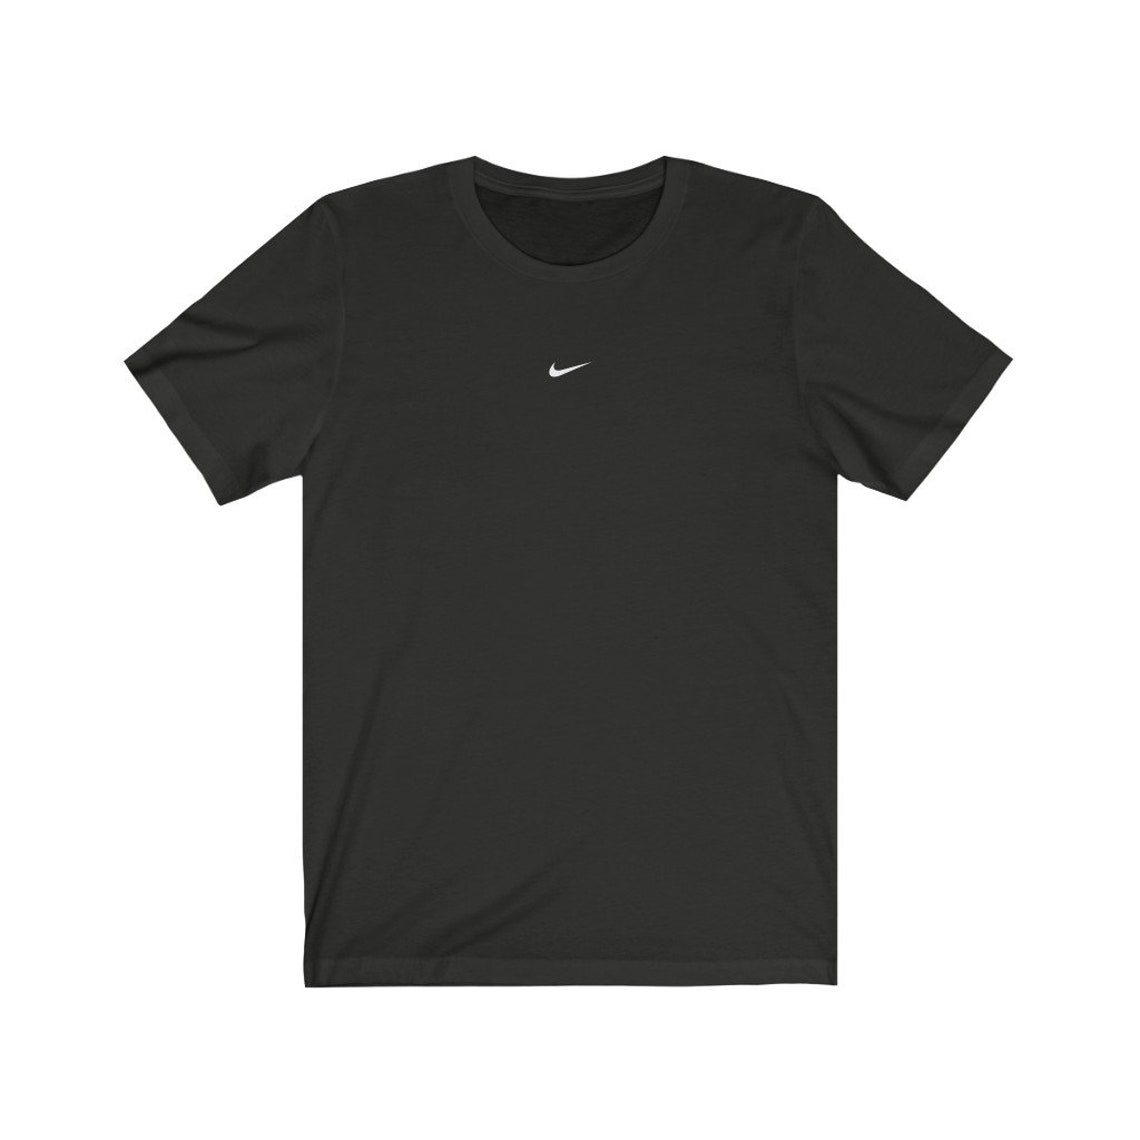 Vintage Checkmark Nike Inspired T-shirt Street Wear T | Etsy